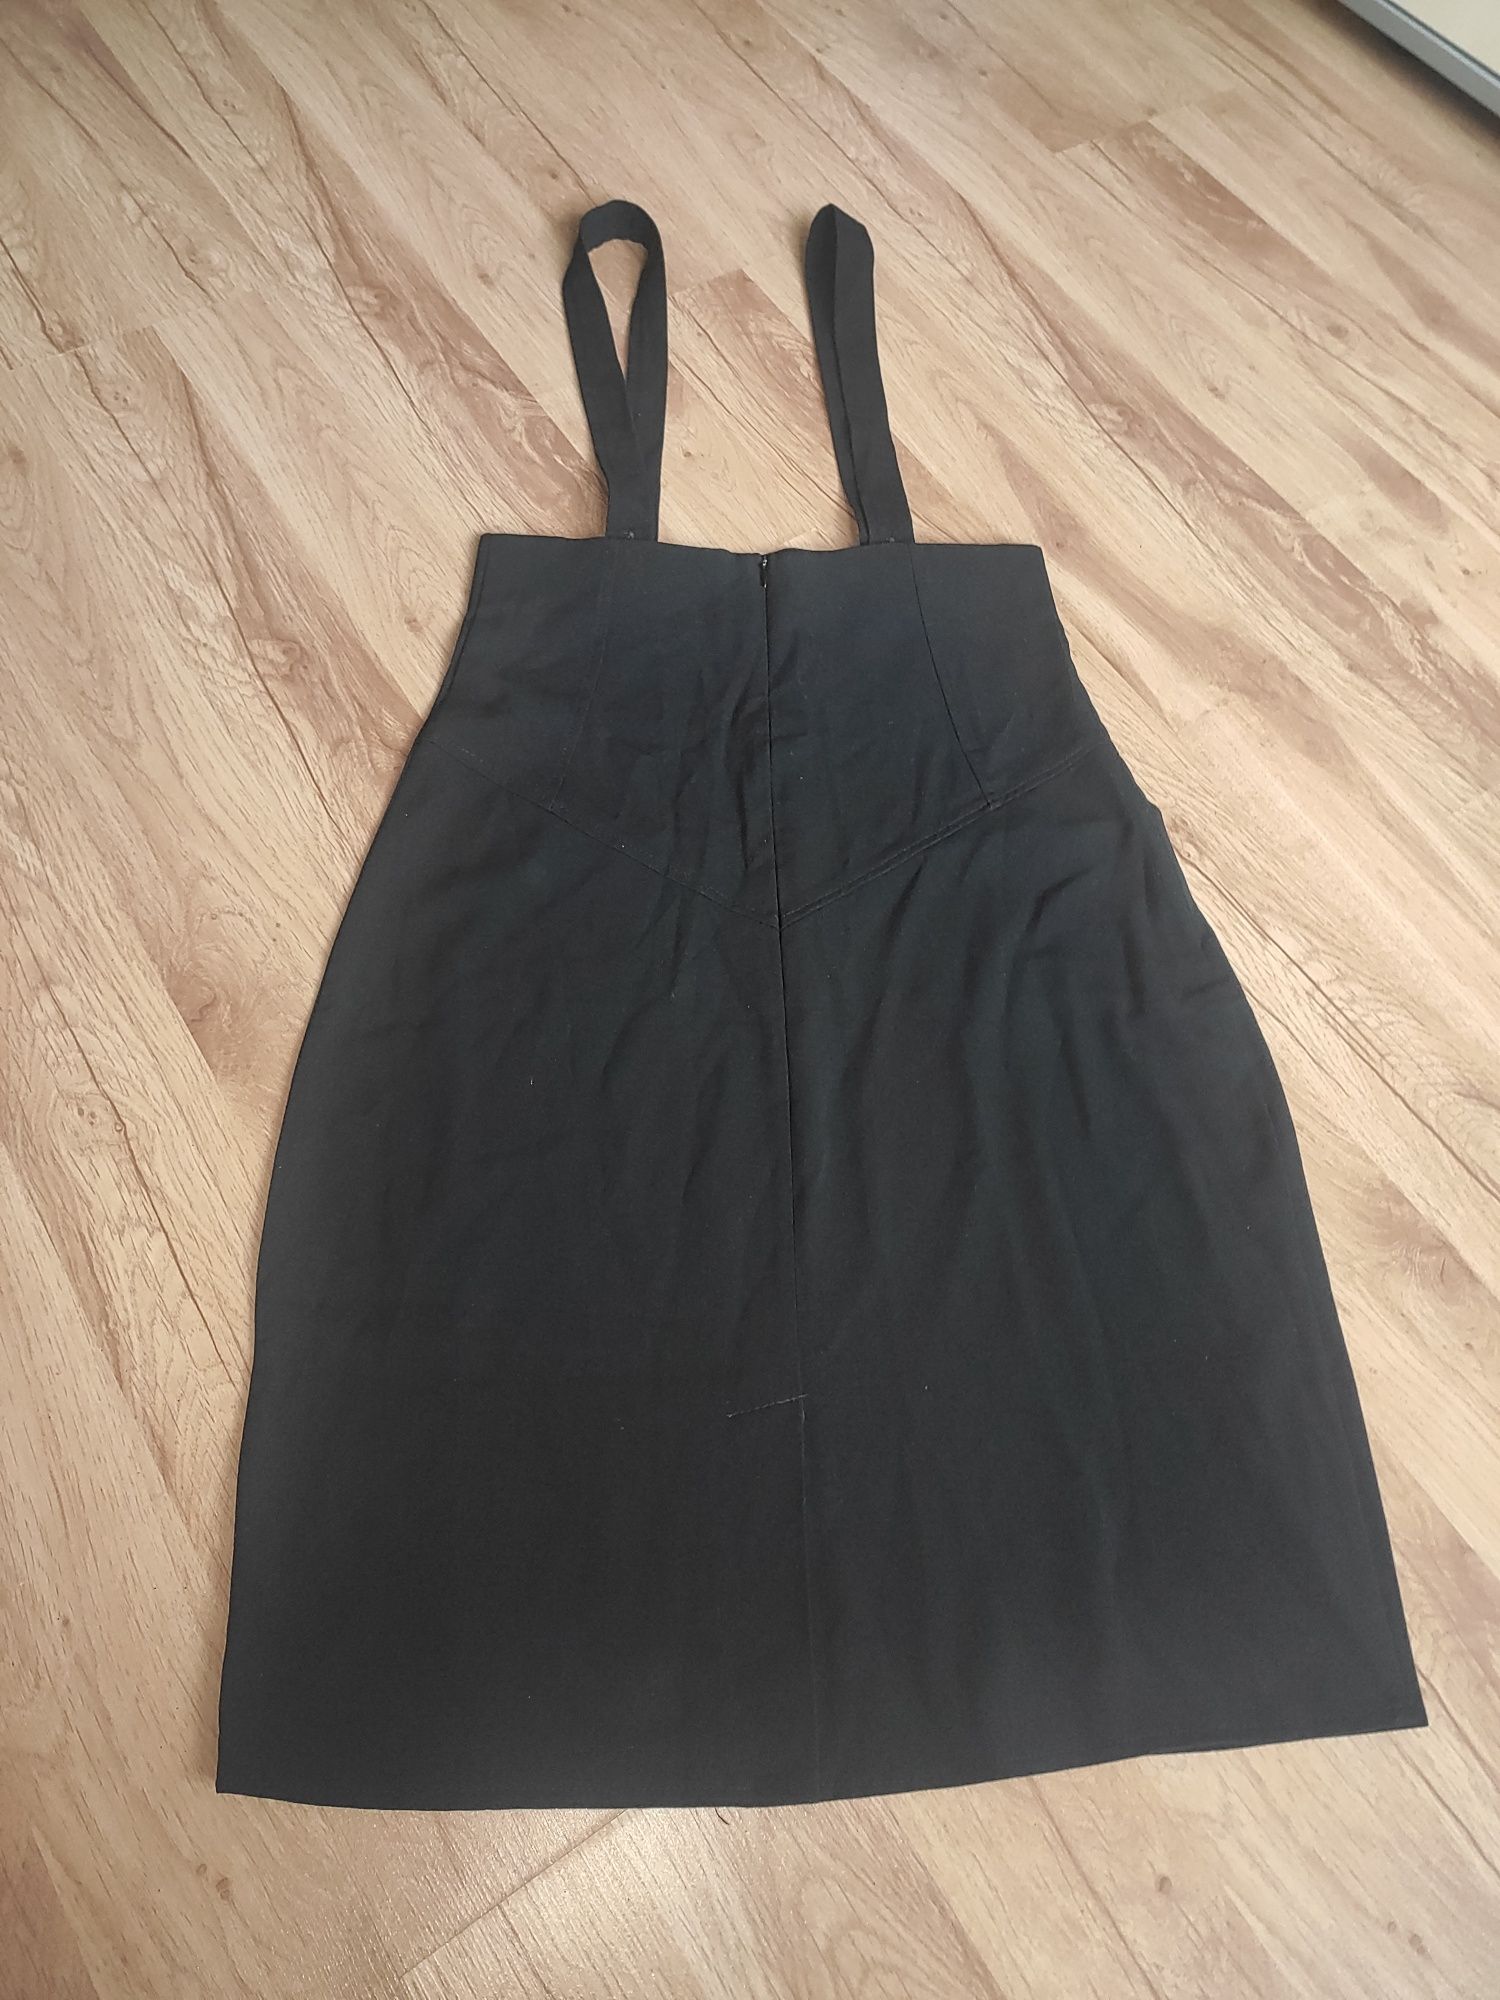 Czarna sukienka prosta ramiączkach suwak 40/L Marol